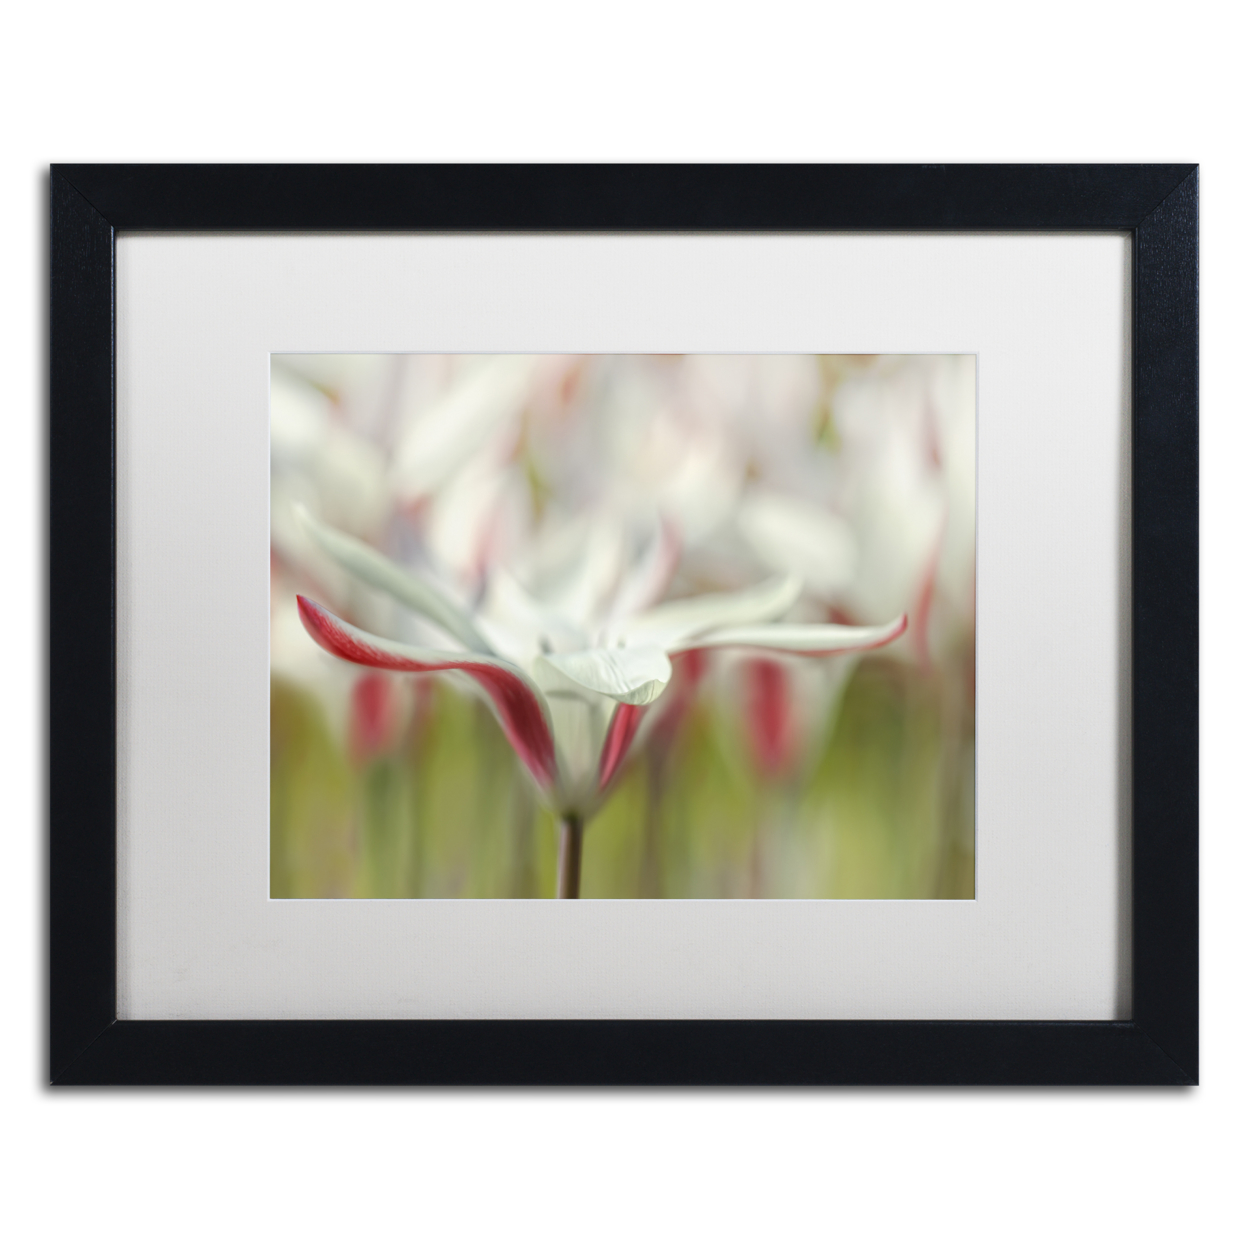 Cora Niele 'Tulipa Clusiana Cashmeriana' Black Wooden Framed Art 18 X 22 Inches